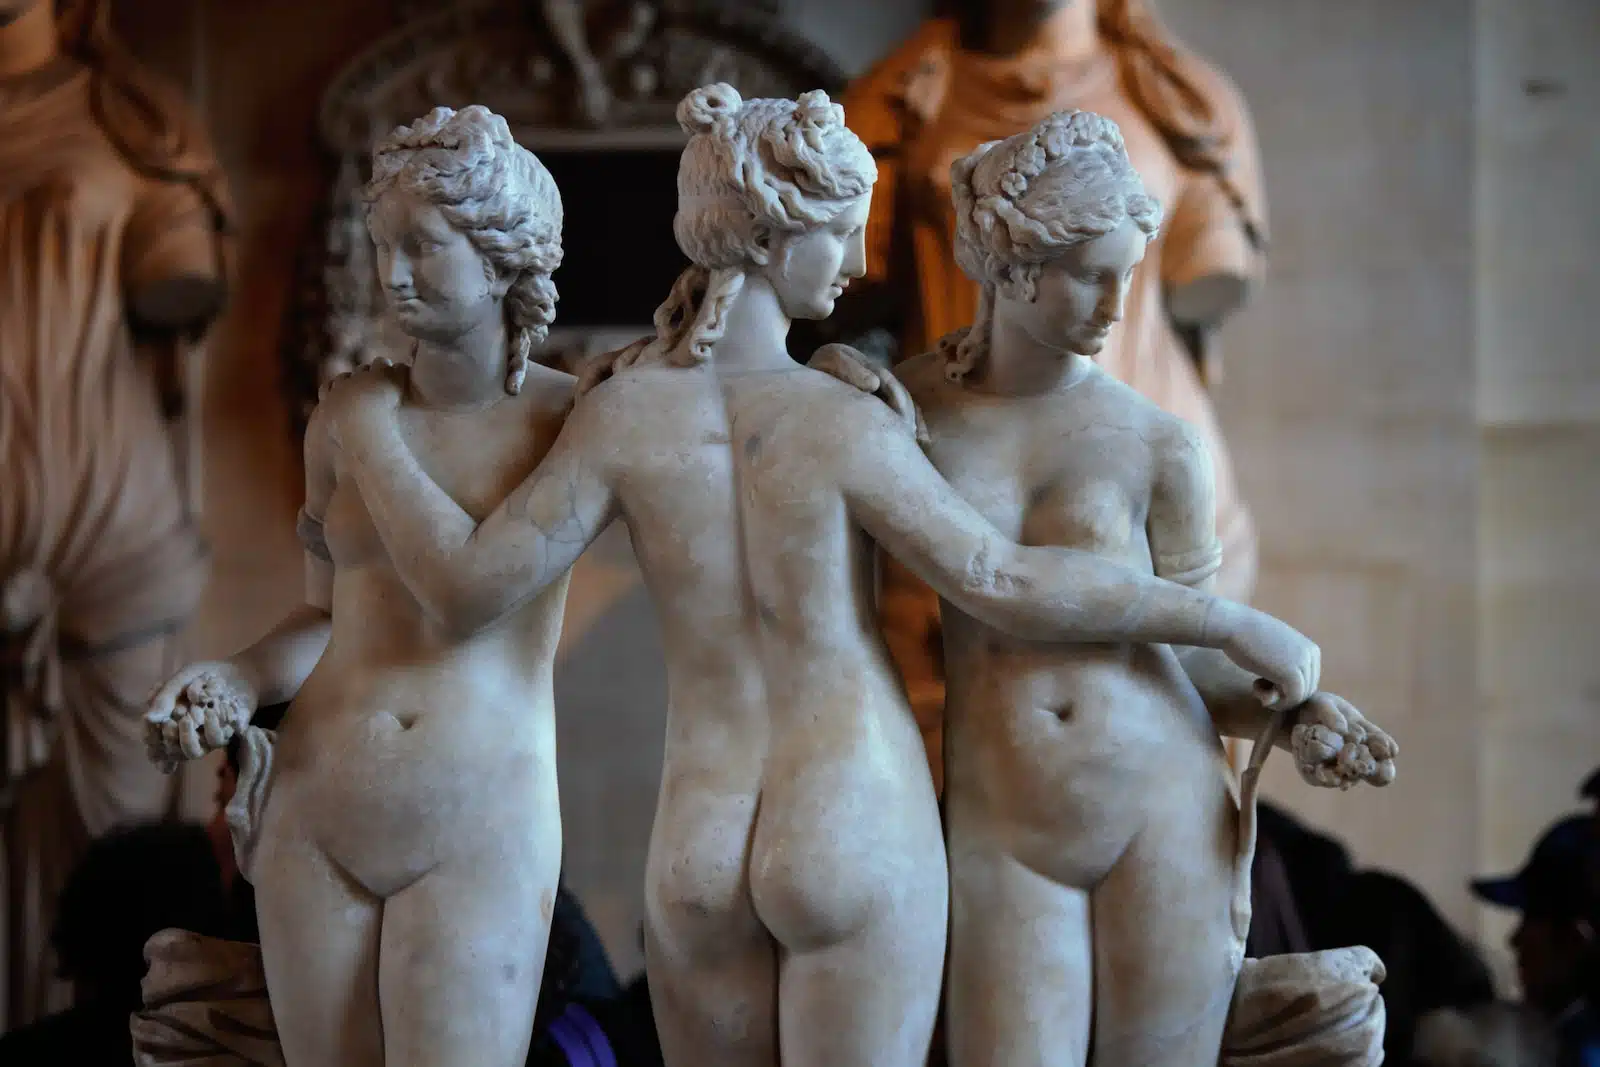 2 topless women ceramic figurine